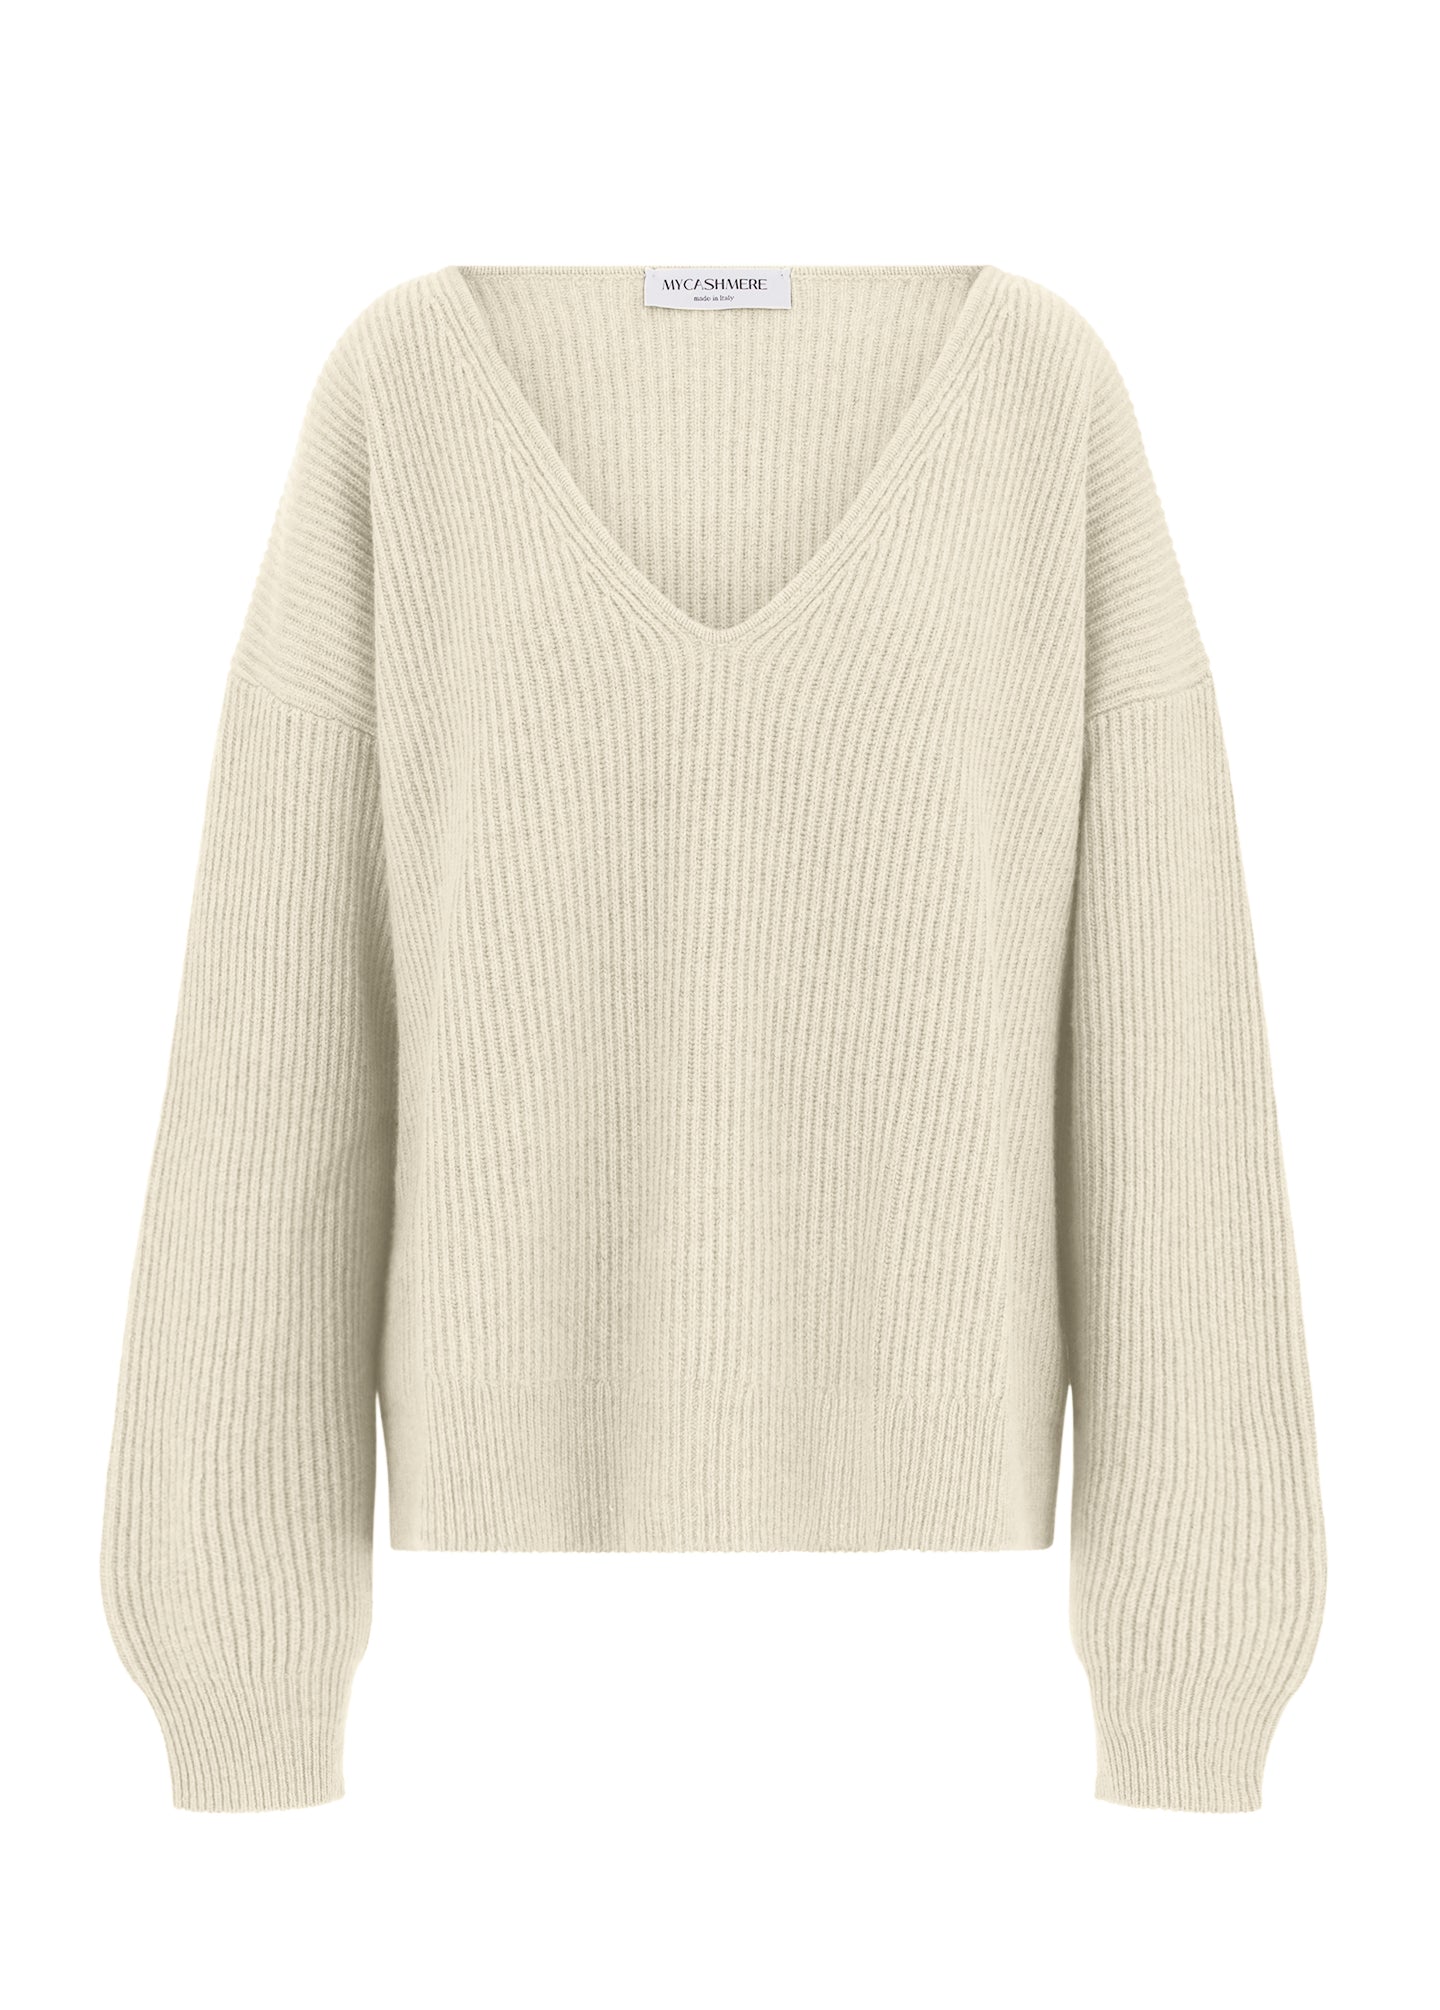 Women's cashmere V neck oversize jumper sweater cream